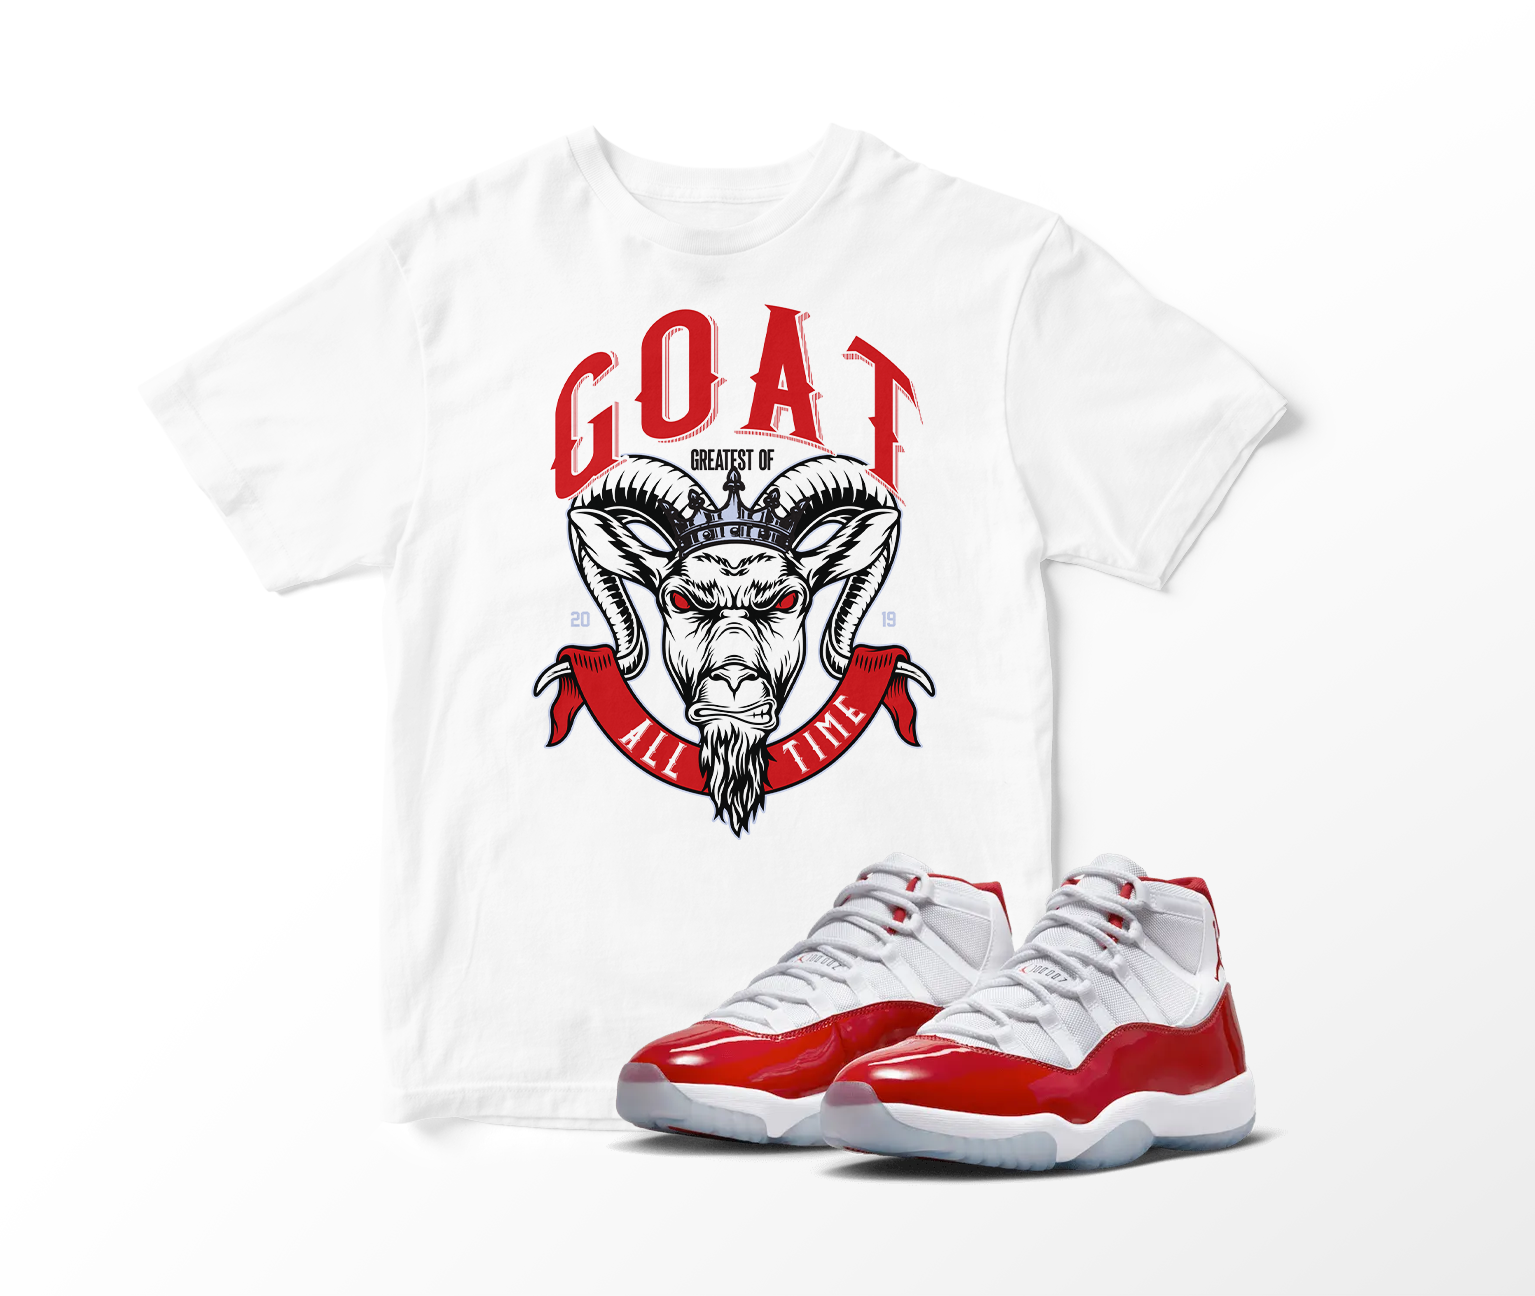 'GOAT' Custom Graphic Short Sleeve T-Shirt To Match Air Jordan 11 Cherry Red